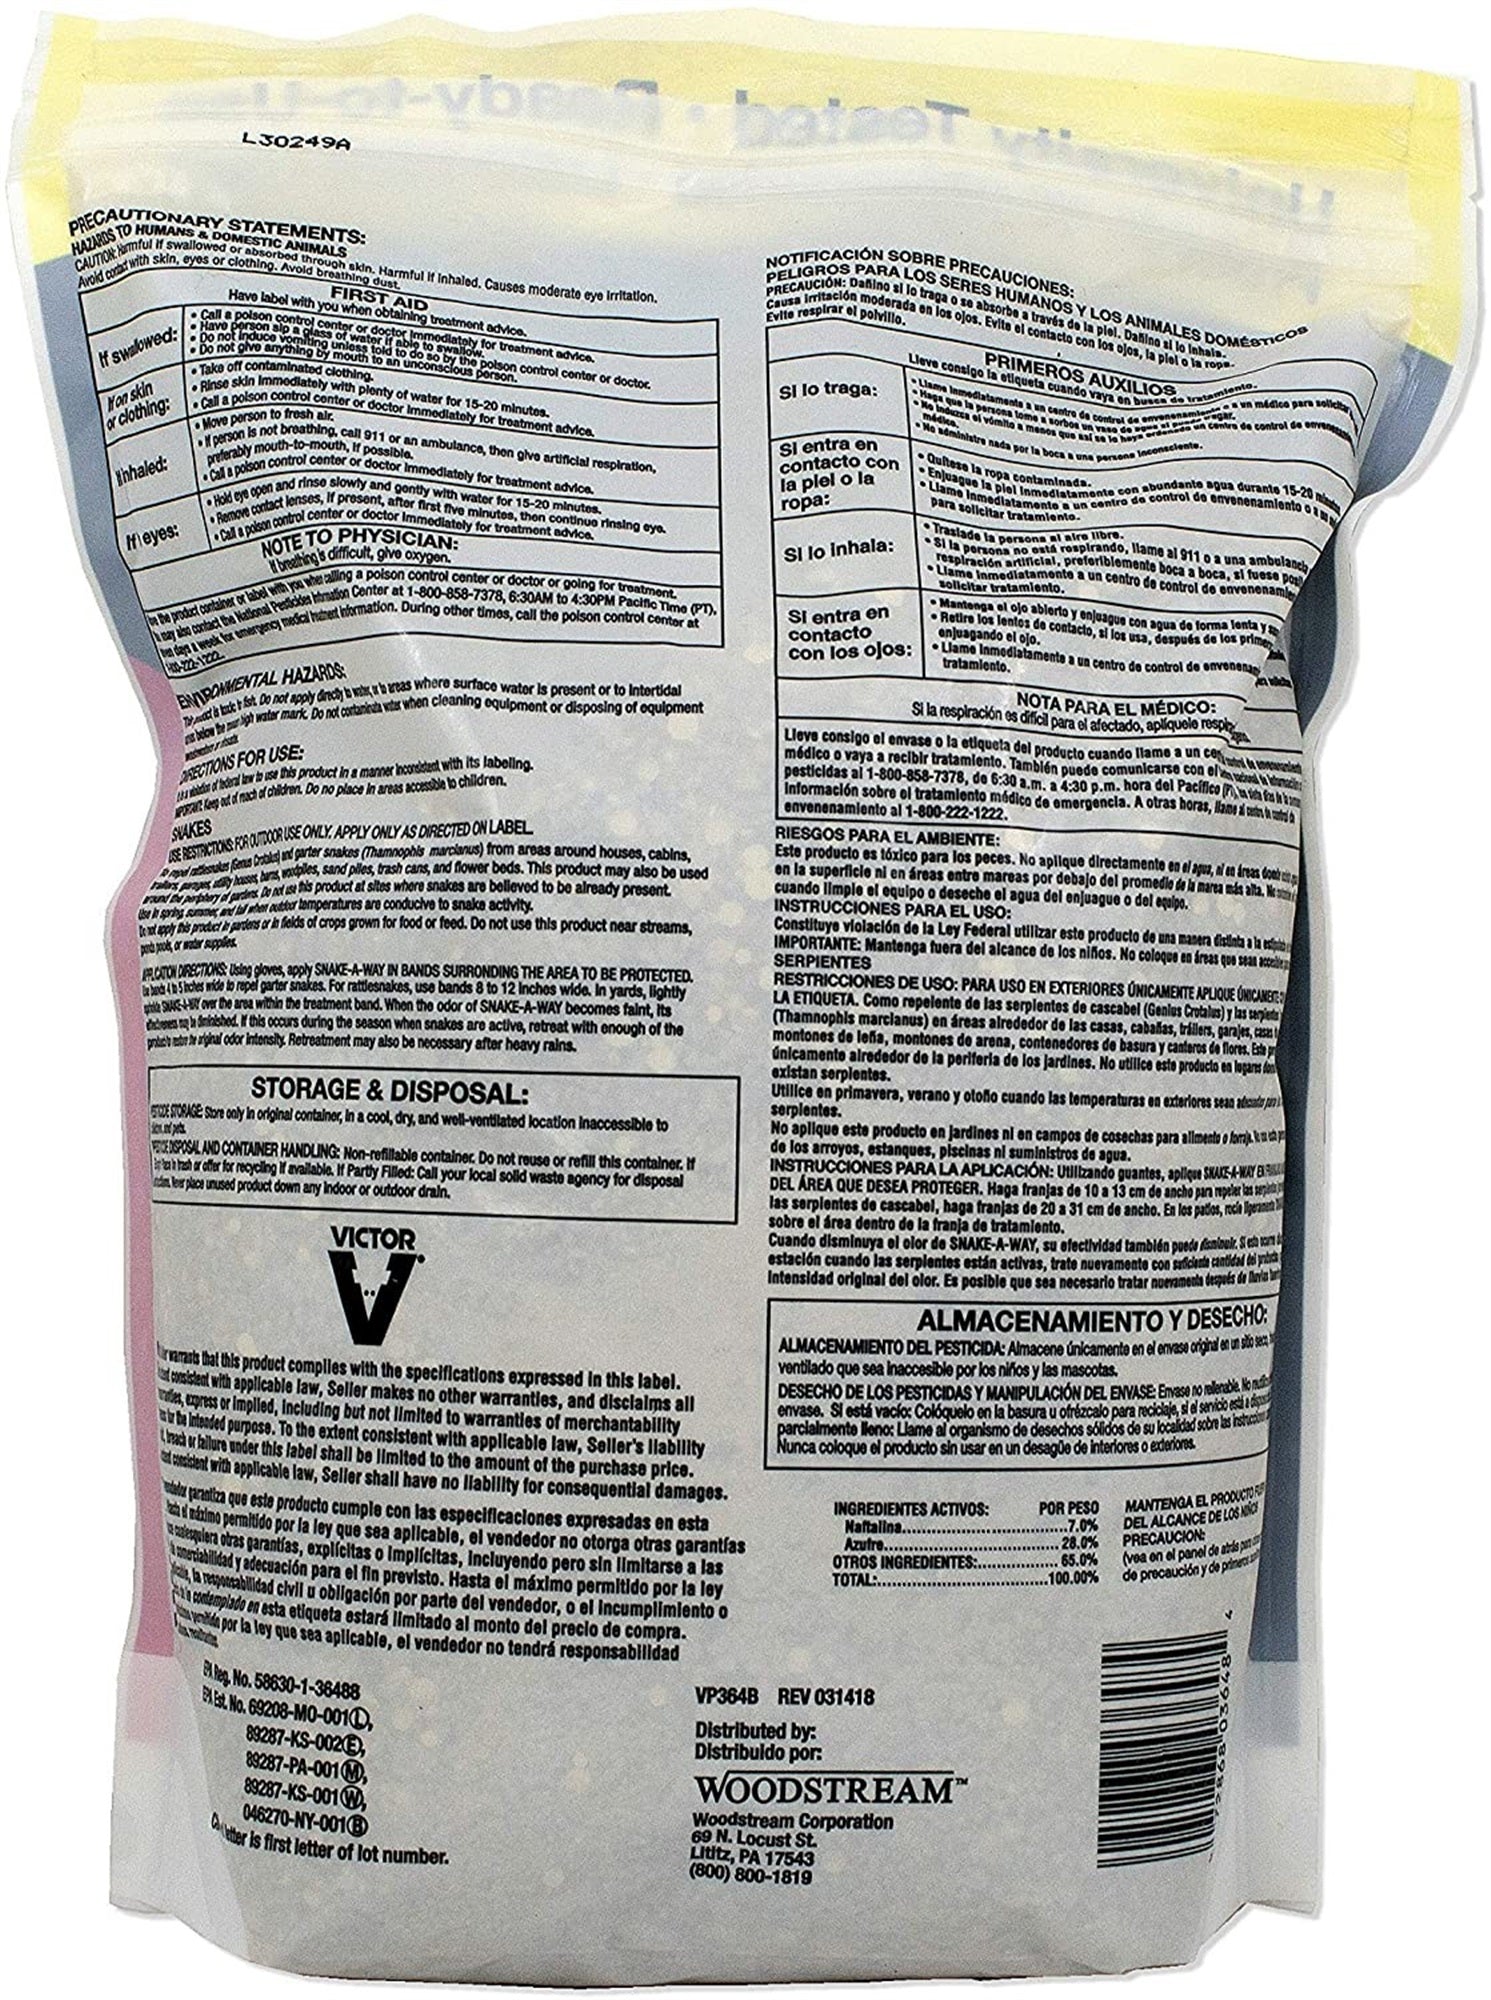 Victor Way Snake Repelling Granules, 4lb bag